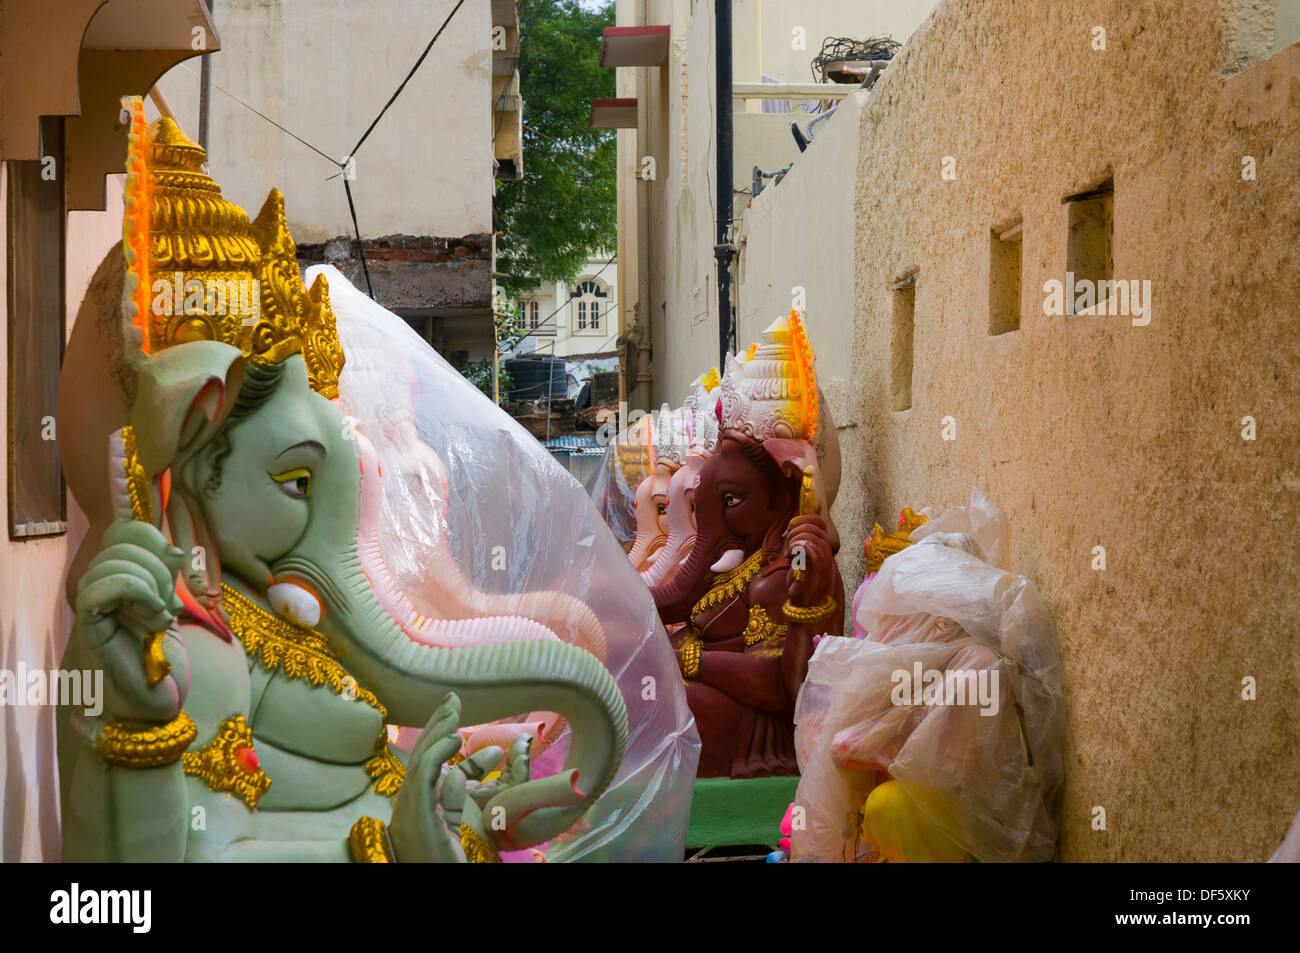 Ganesha Idols on sale for Ganesh Chaturthi. Birthday of Lord Ganesha. Stock Photo